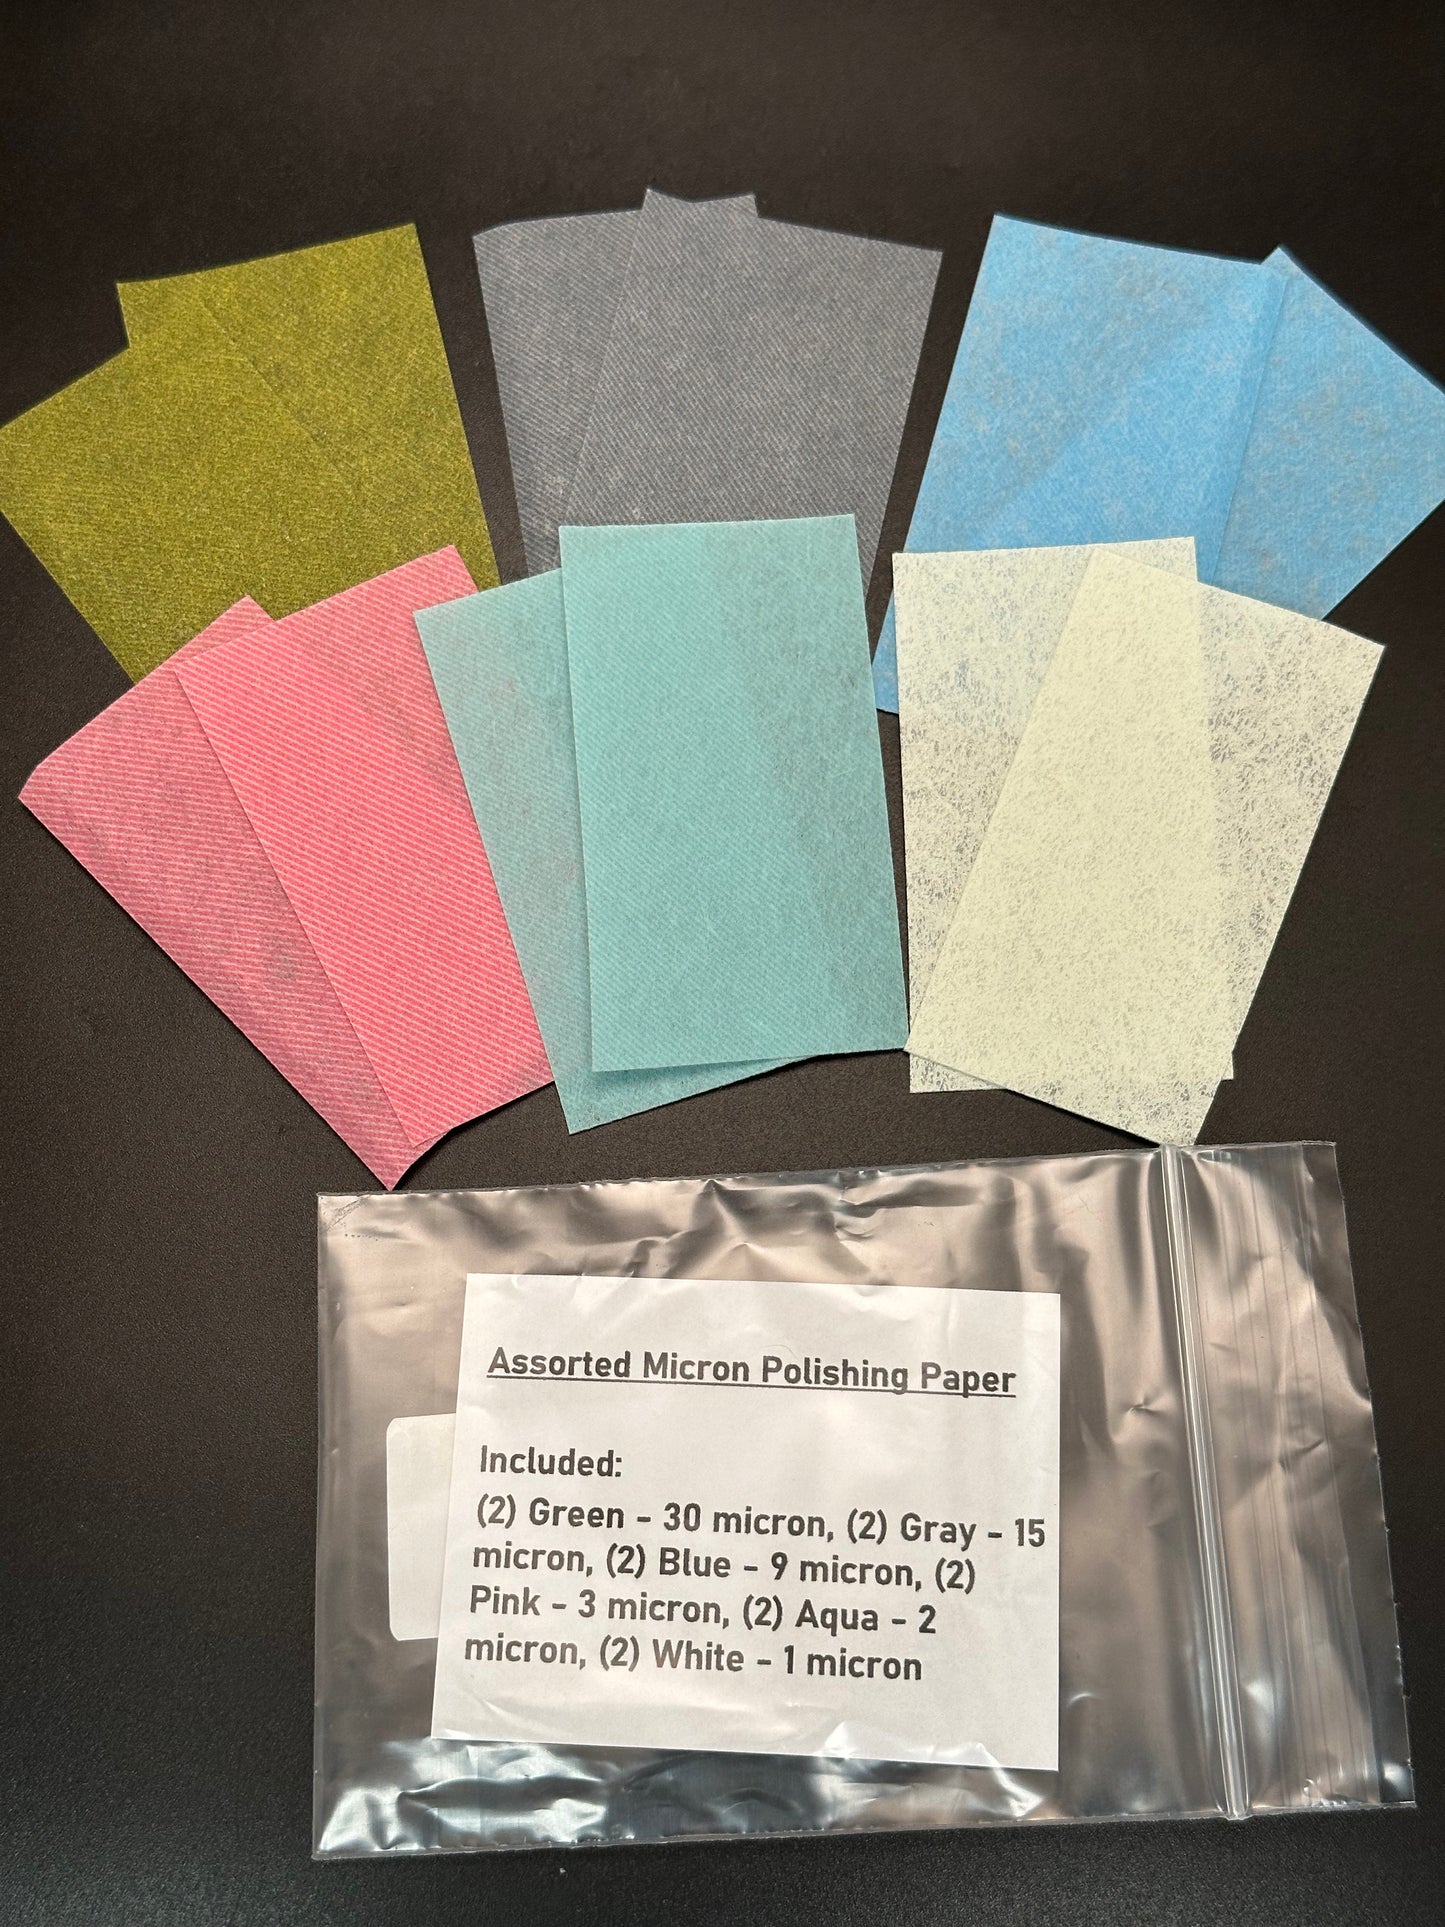 Micron polishing paper assortment